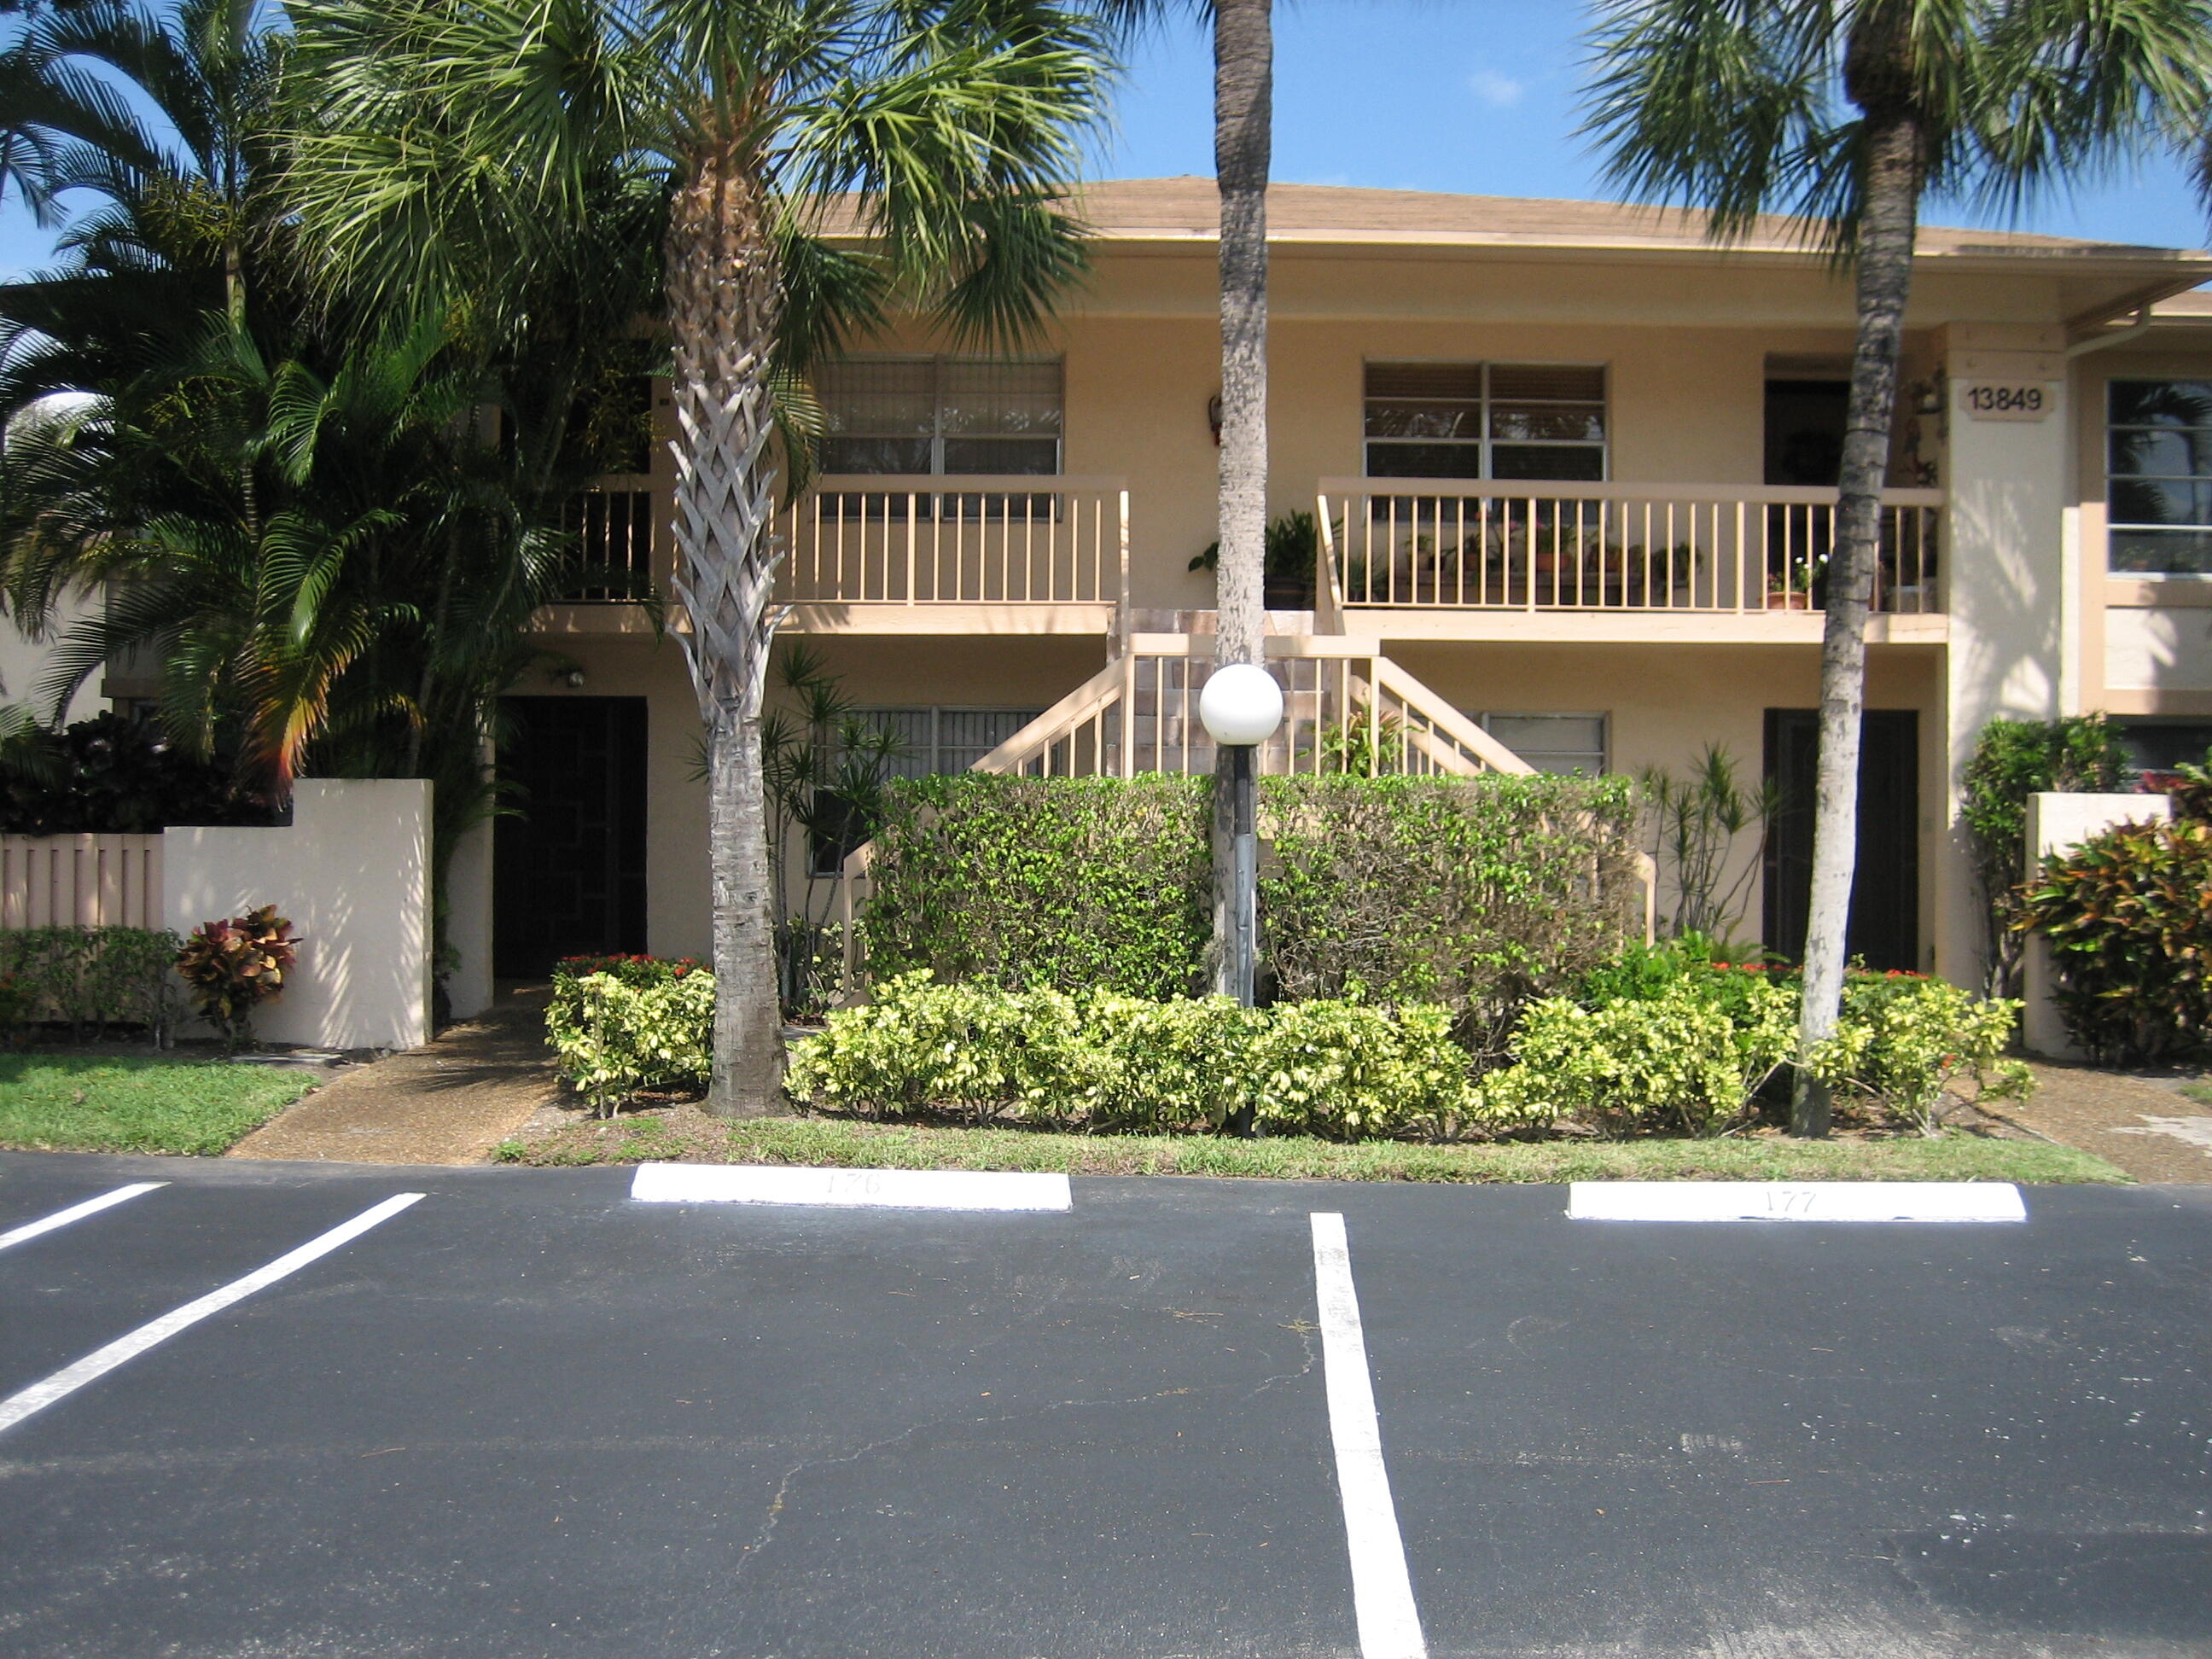 13849 Royal Palm Court A, Delray Beach, Palm Beach County, Florida - 2 Bedrooms  
2 Bathrooms - 